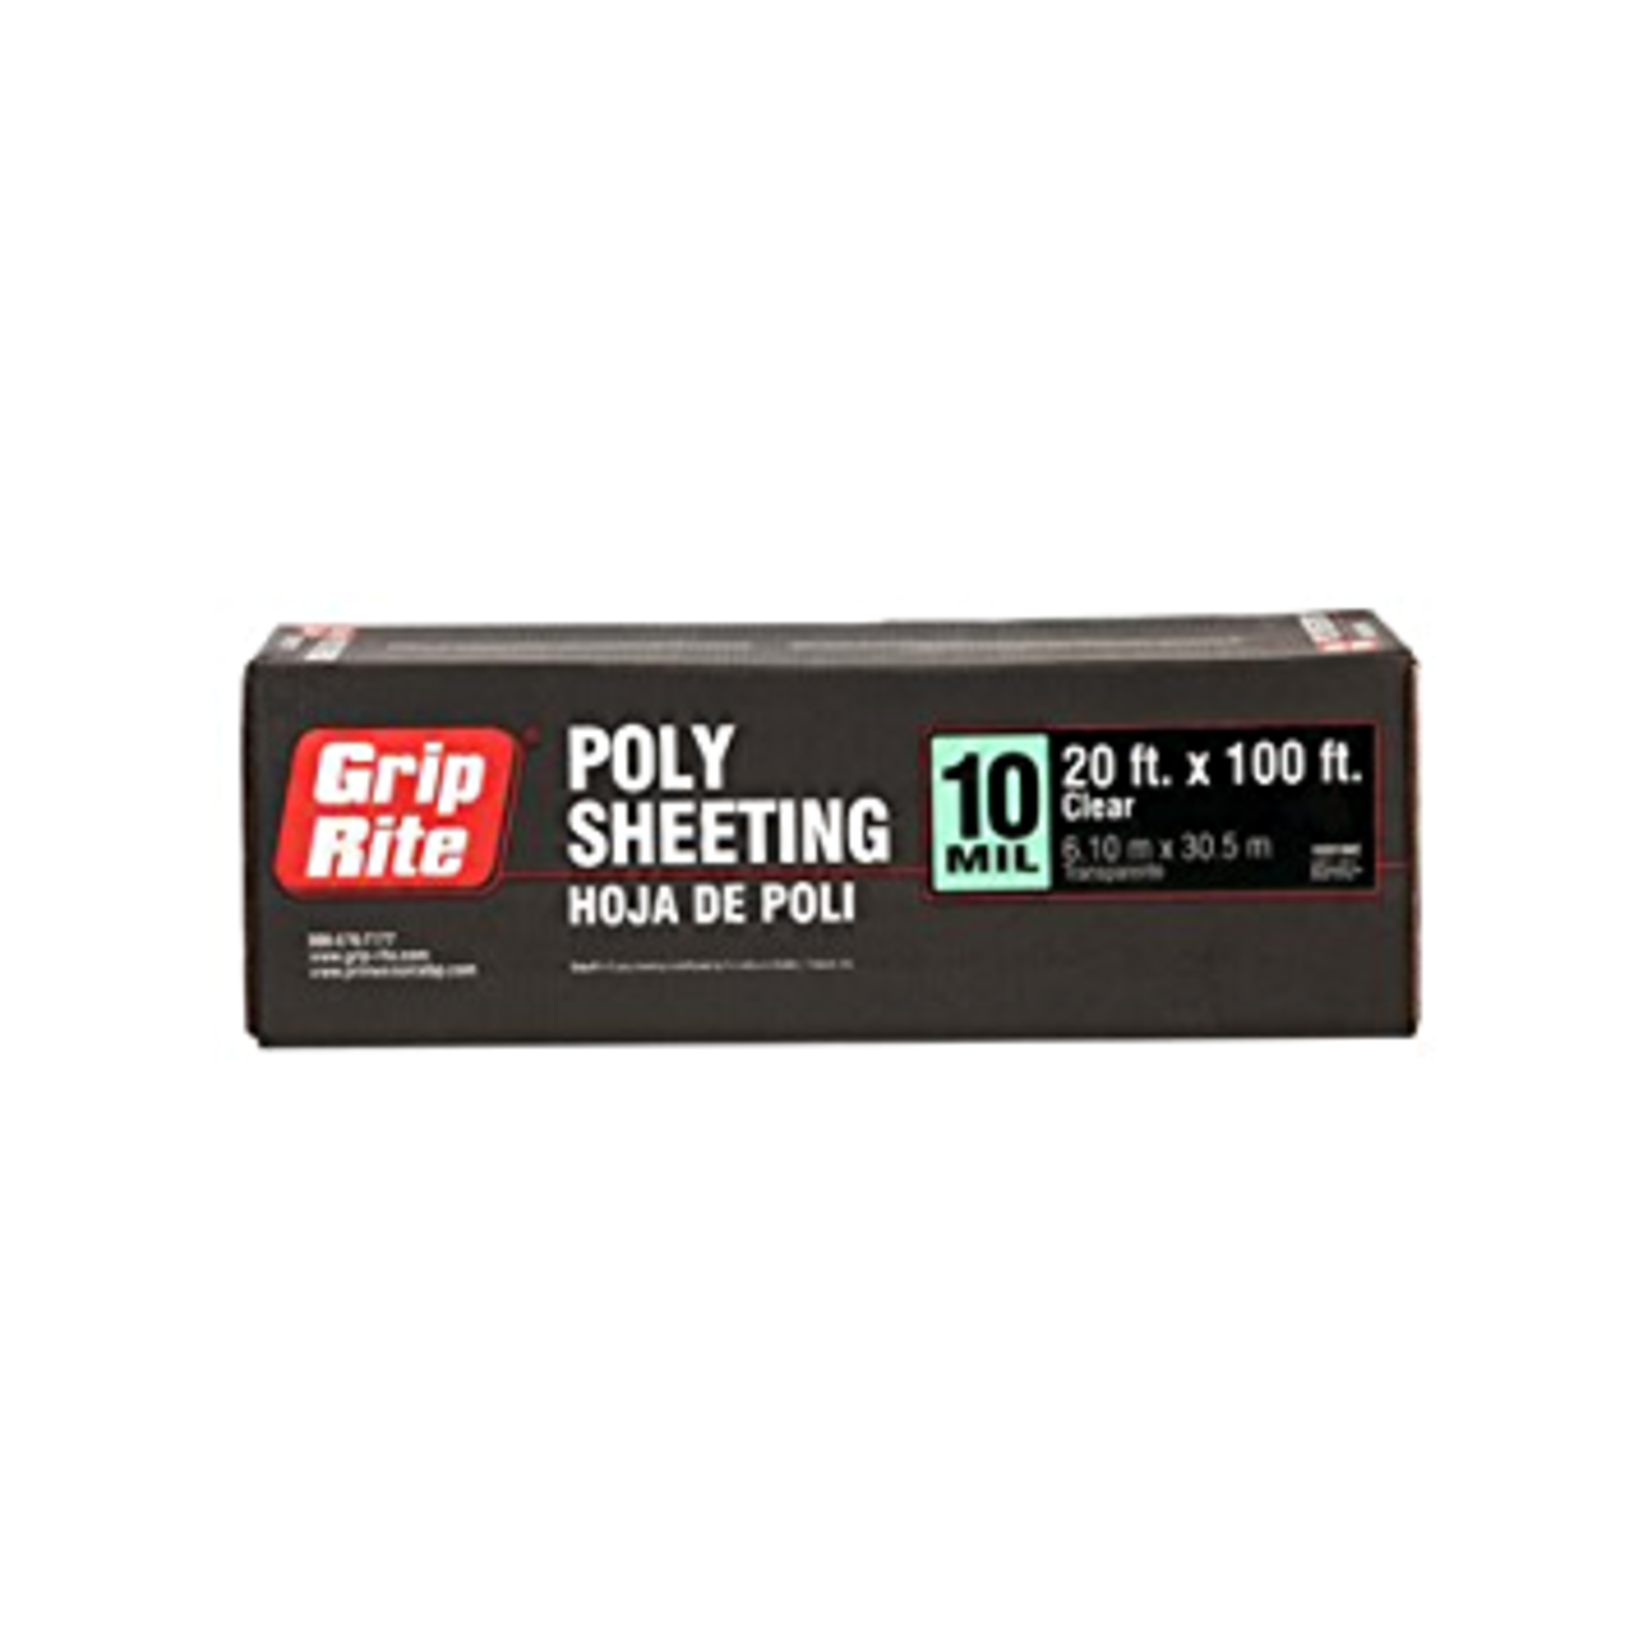 Grip Rite Grip Rite Poly Sheeting - 10 MIL -  20' x 100' - Clear